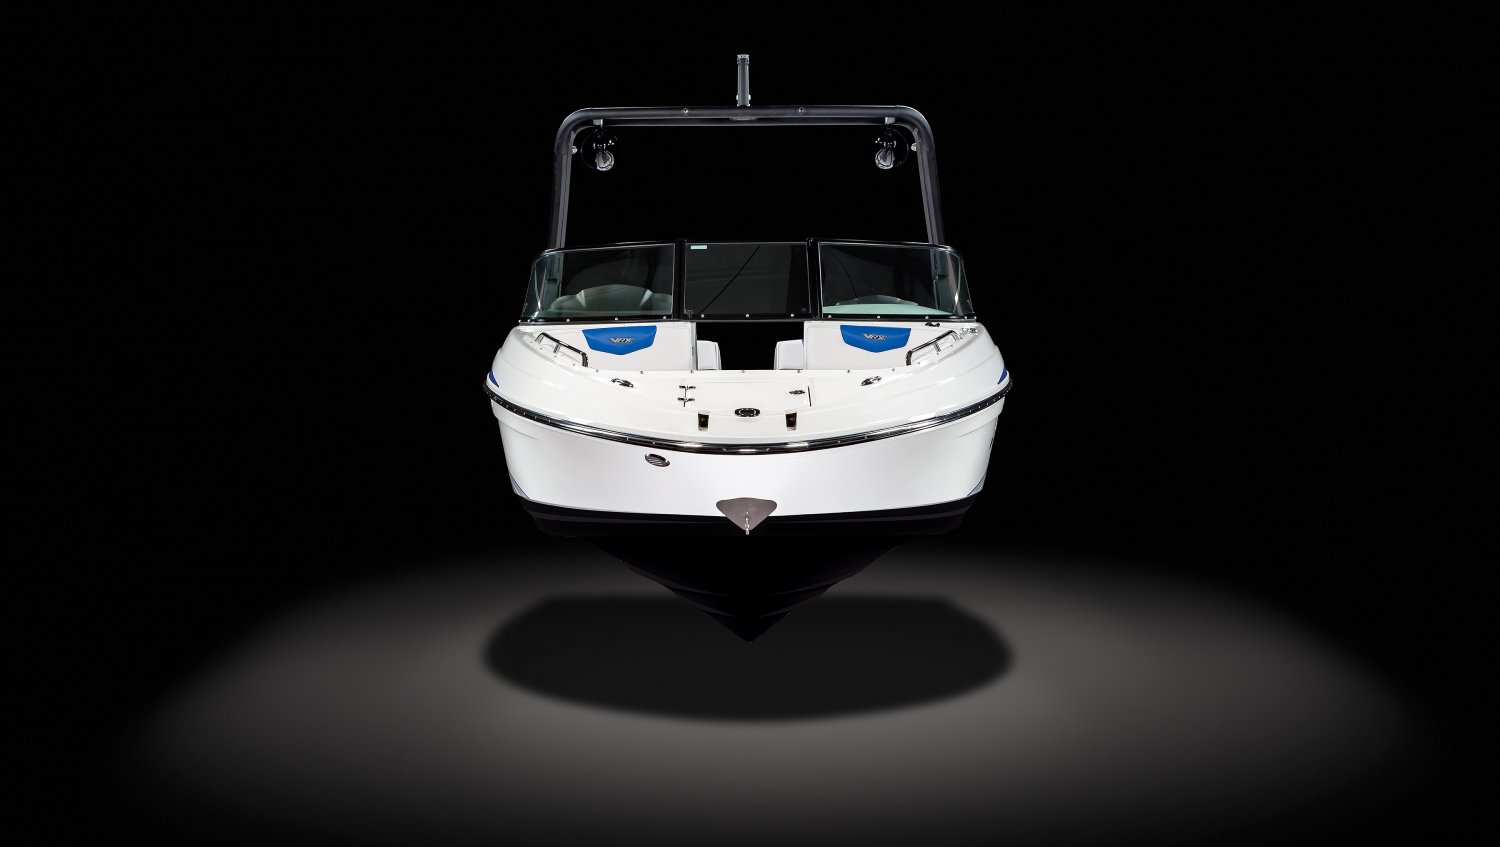 2021 Vortex 2430 Vortex VRX for sale at Chaparral Boats Australia